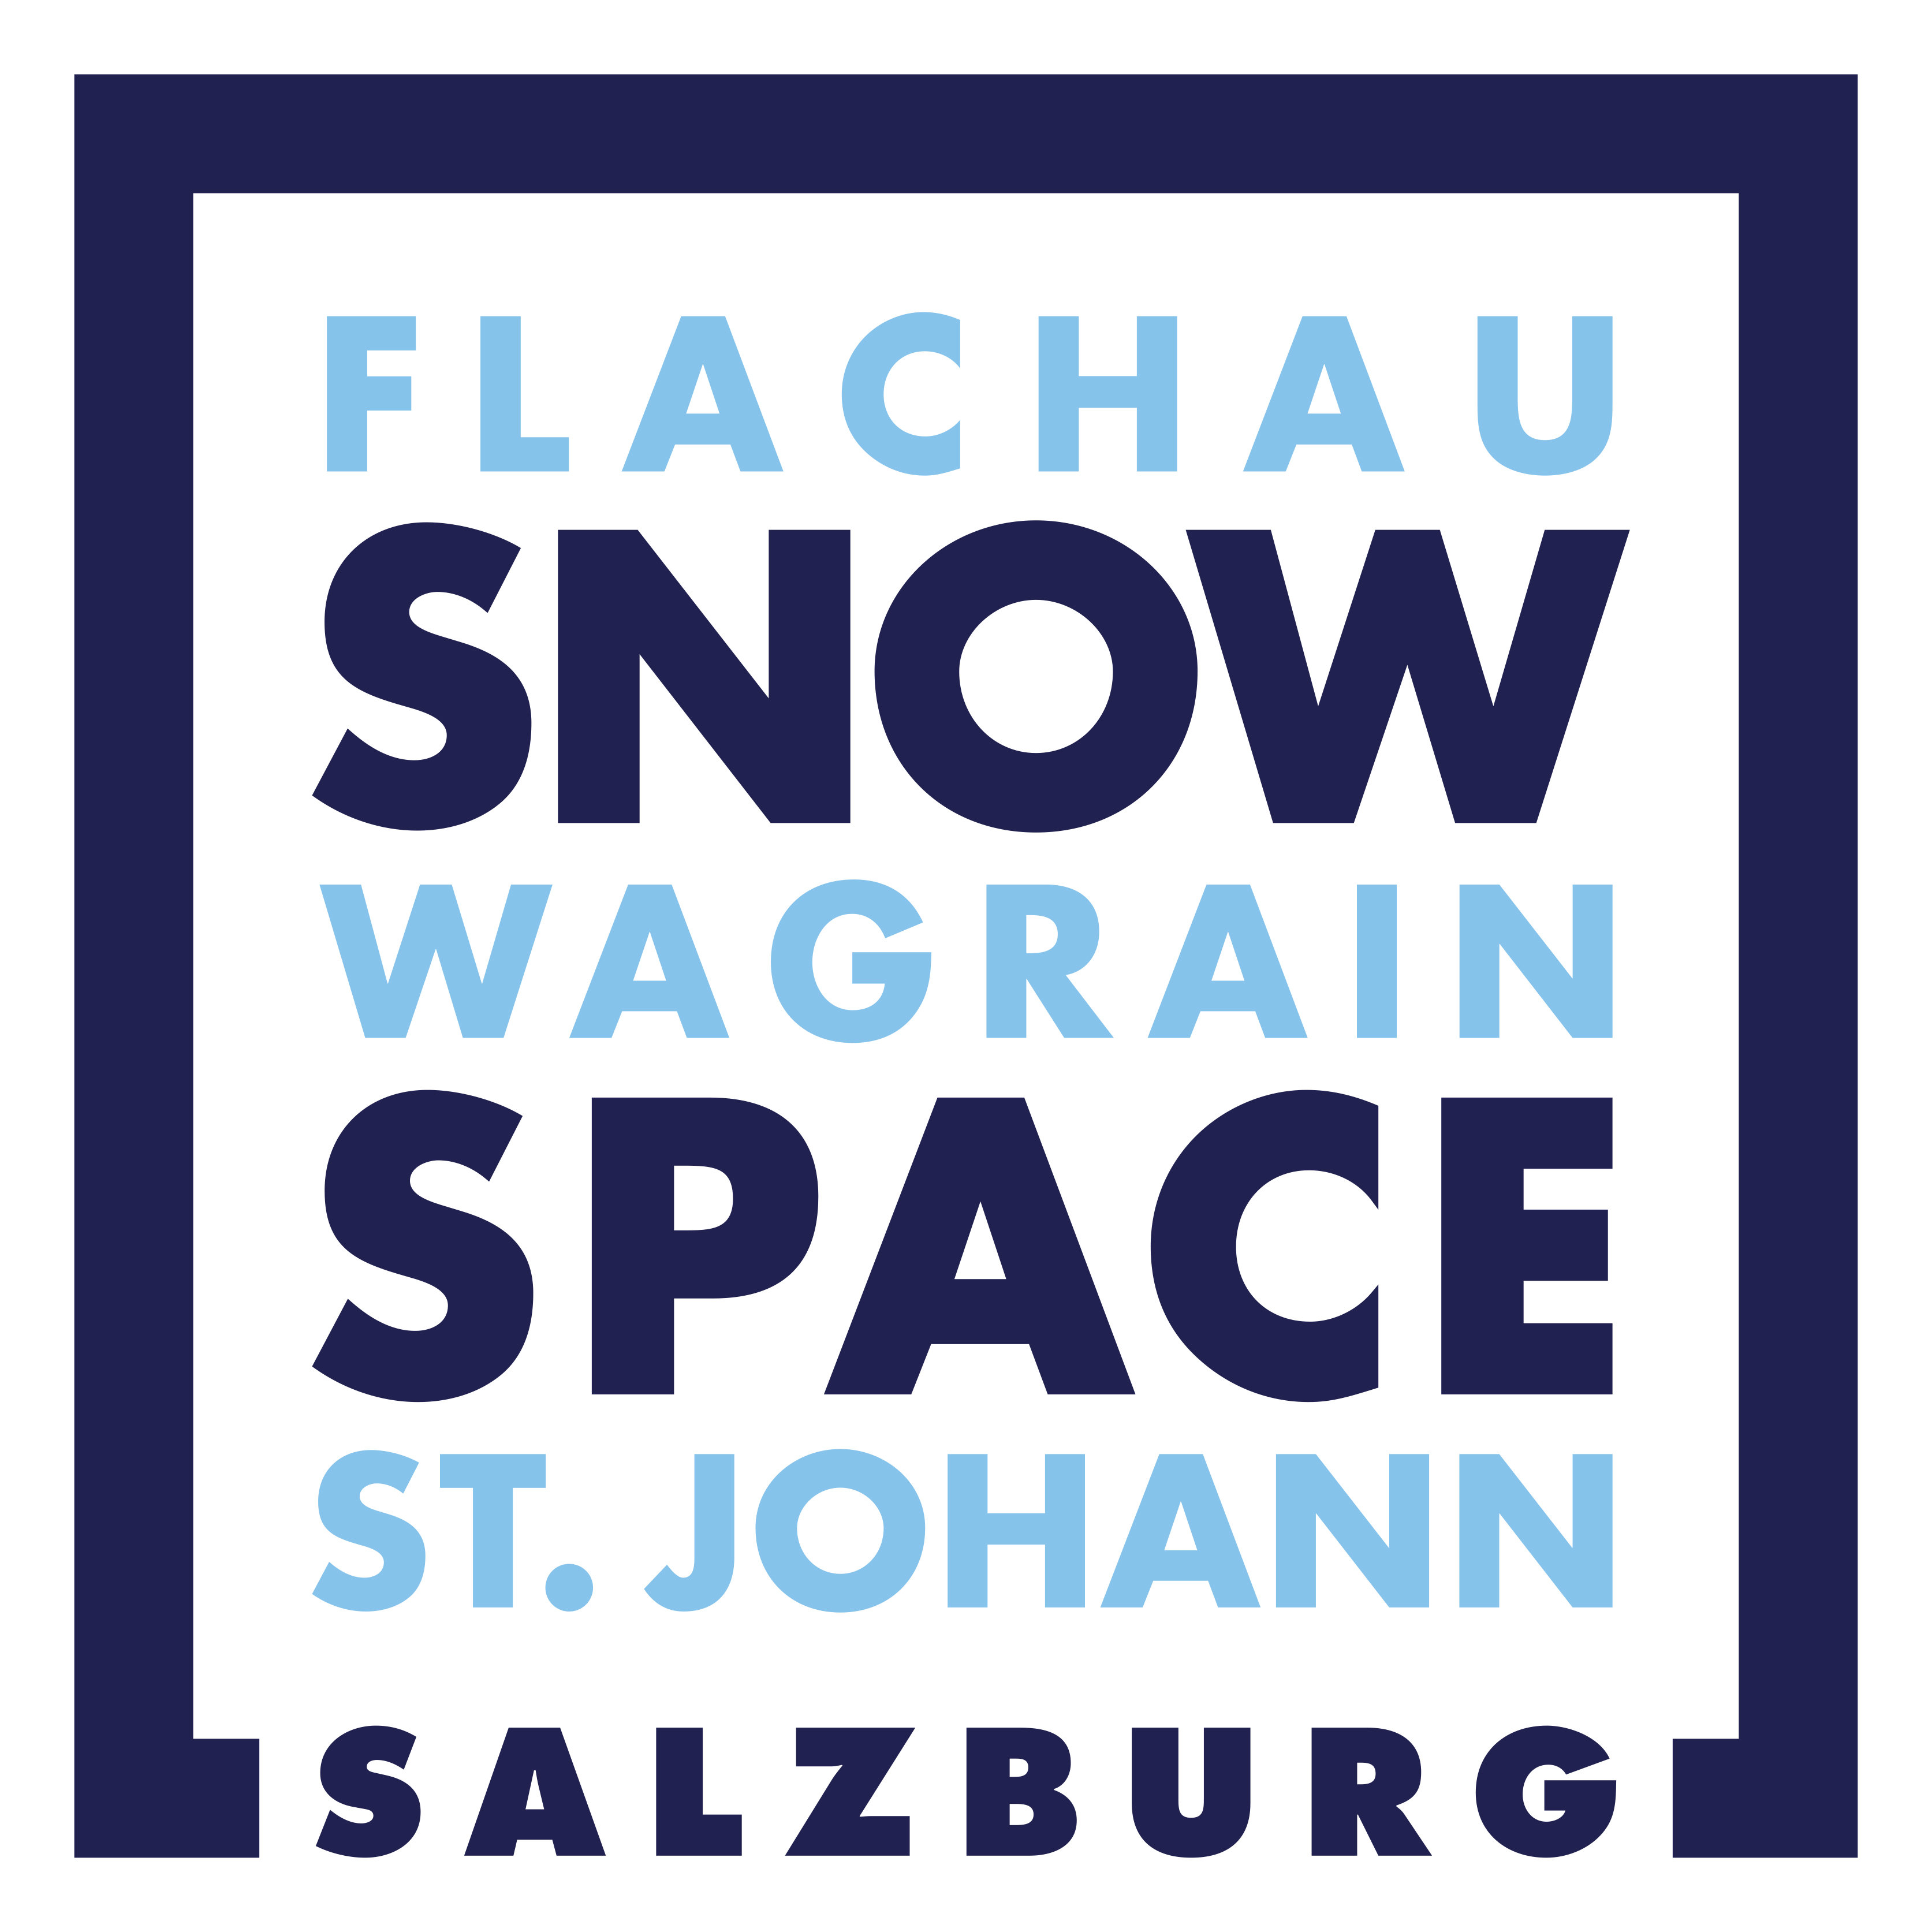 SnowSpaceSalzburg_KeyVisual_2017_2018 (002).jpg